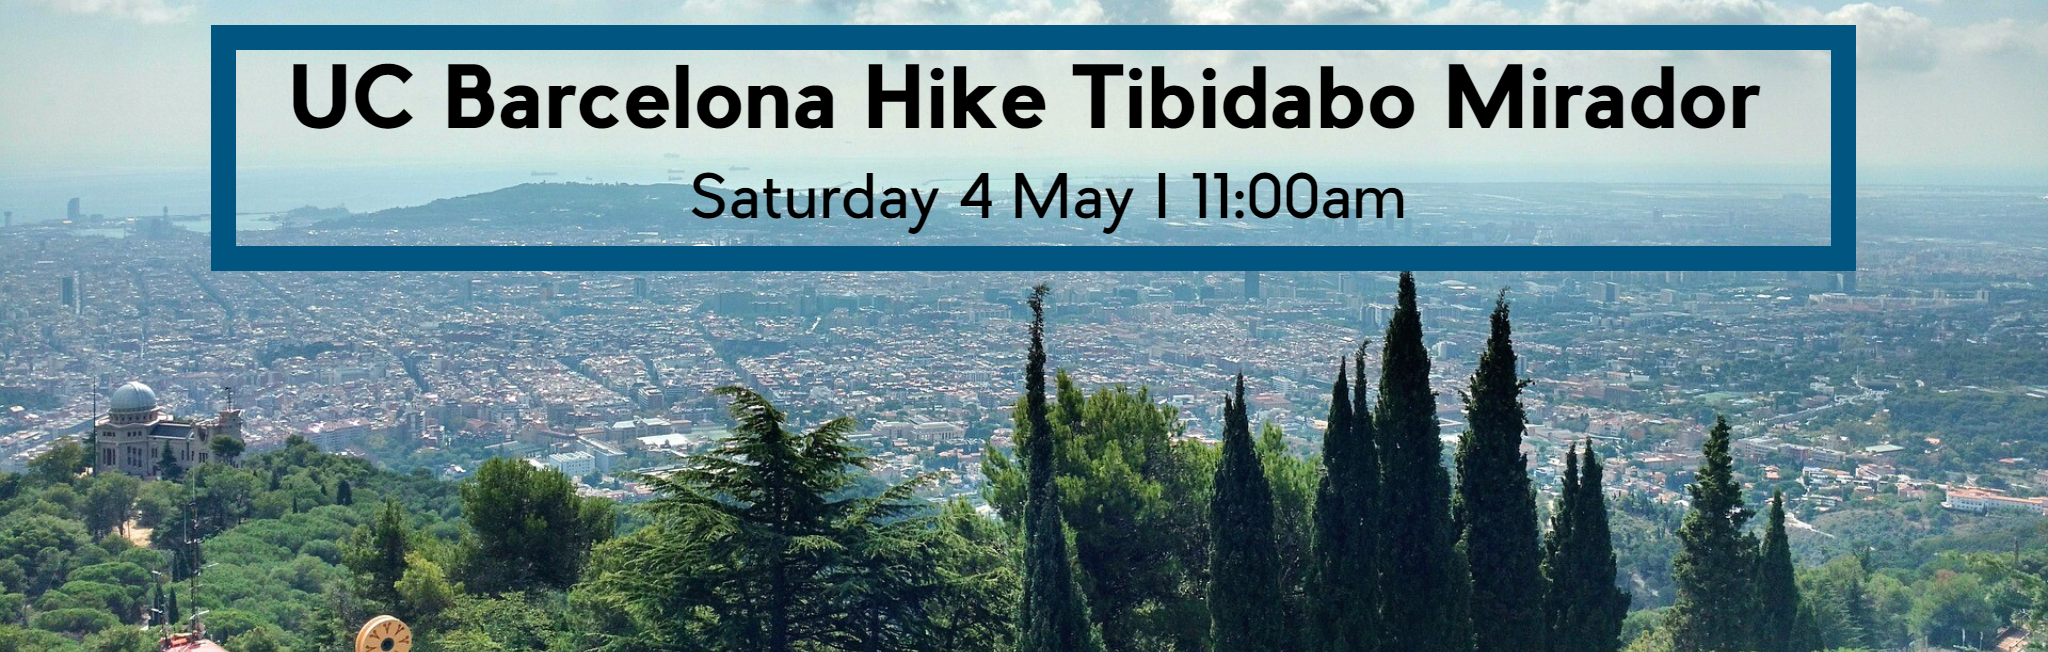 Join us on Saturday 4 May for a small hike at Tibidabo Mirador - Register